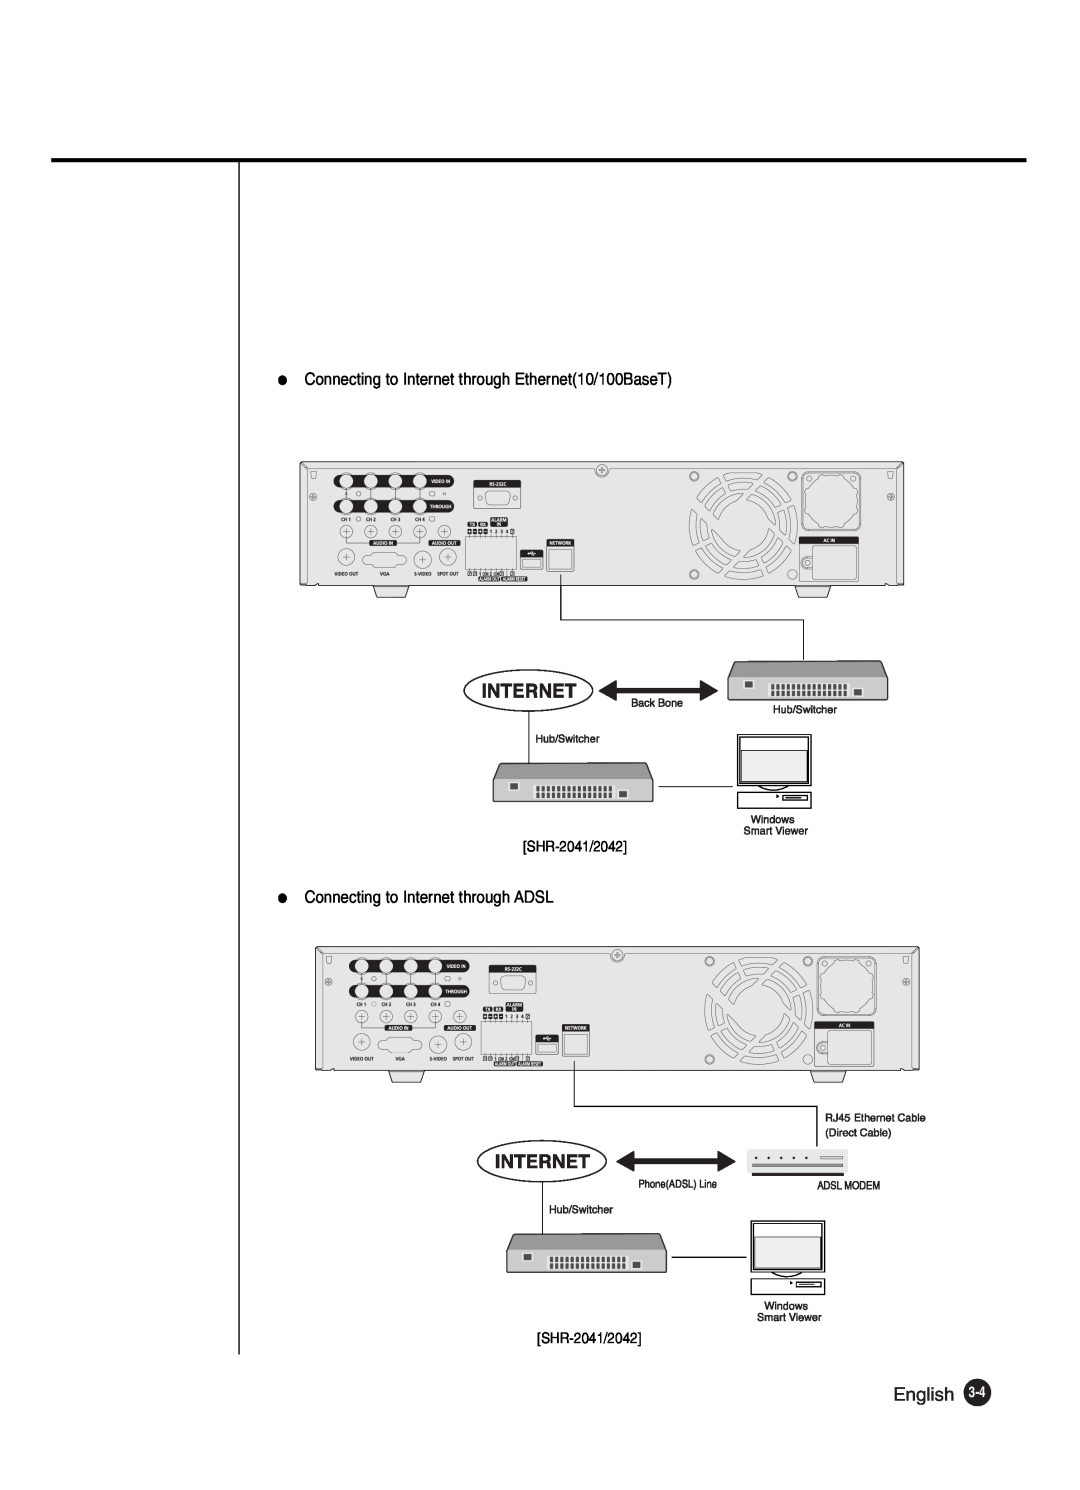 Samsung SHR-2040P250 English, Connecting to Internet through Ethernet10/100BaseT, Connecting to Internet through ADSL 